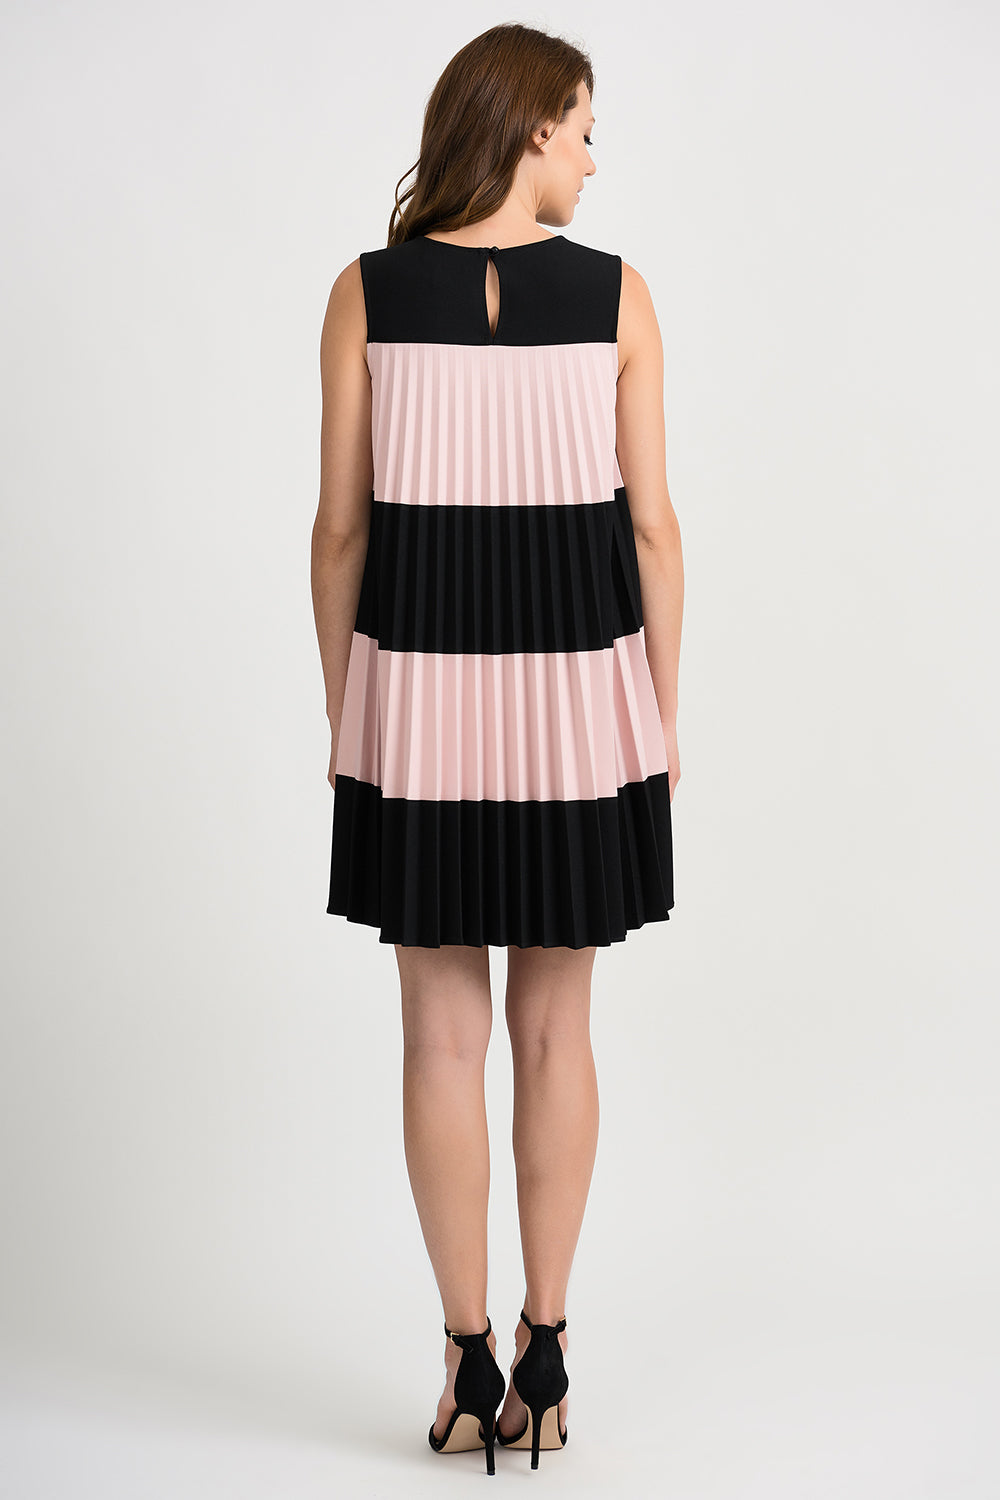 Joseph Ribkoff Black-Rose Dress Style 201402